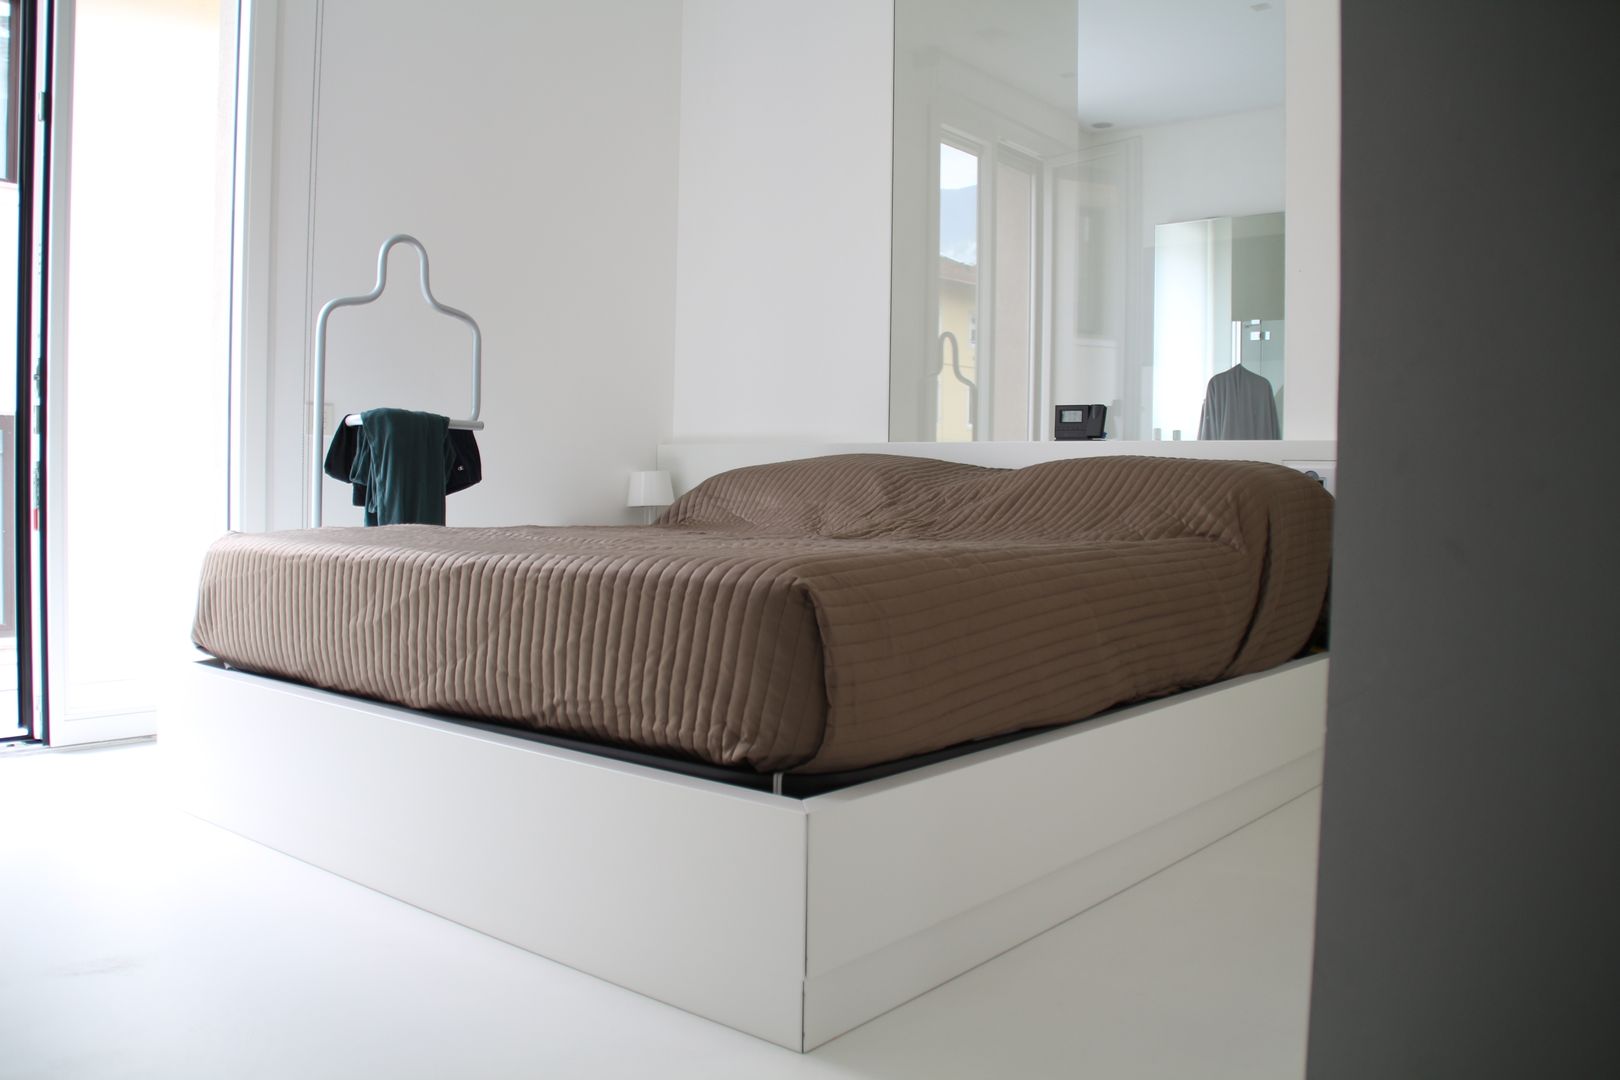 TOTAL WHITE, Serenella Pari design Serenella Pari design Dormitorios minimalistas